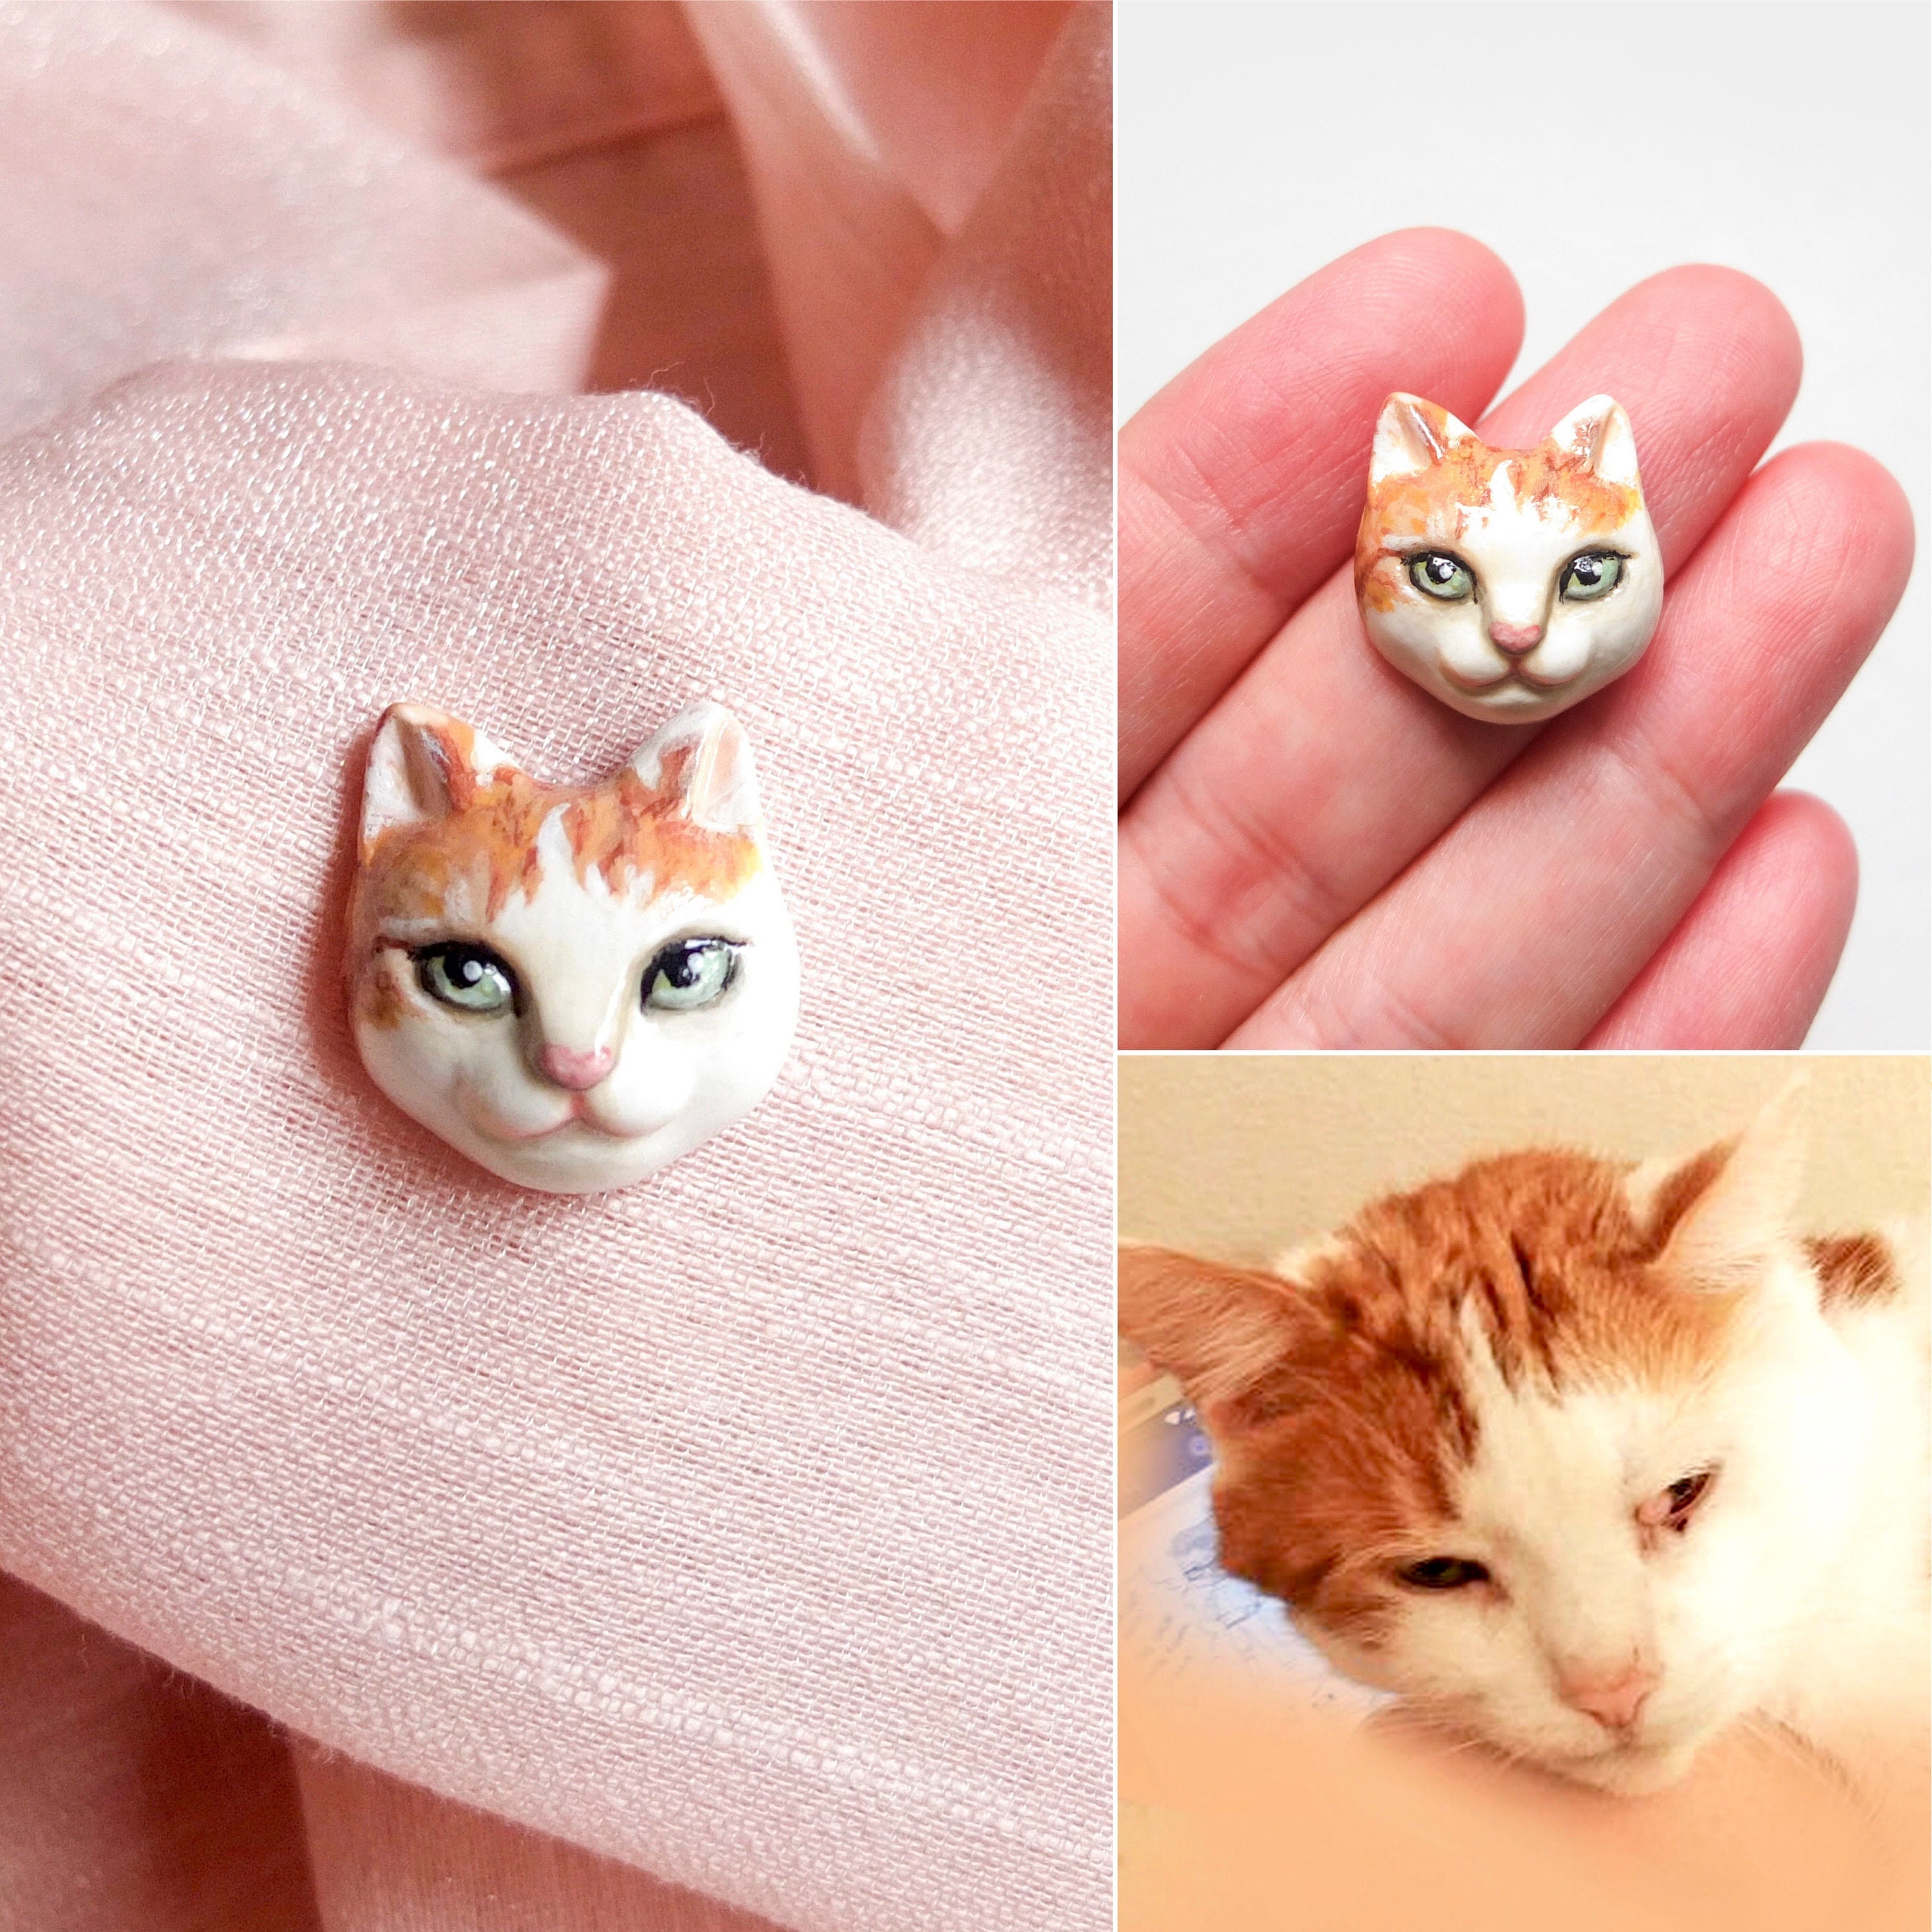 HannahLoveCeramics Custom Cat Brooch, Custom Porcelain Cat Pin, Kitty Jewelry, Gift for Cat Lover